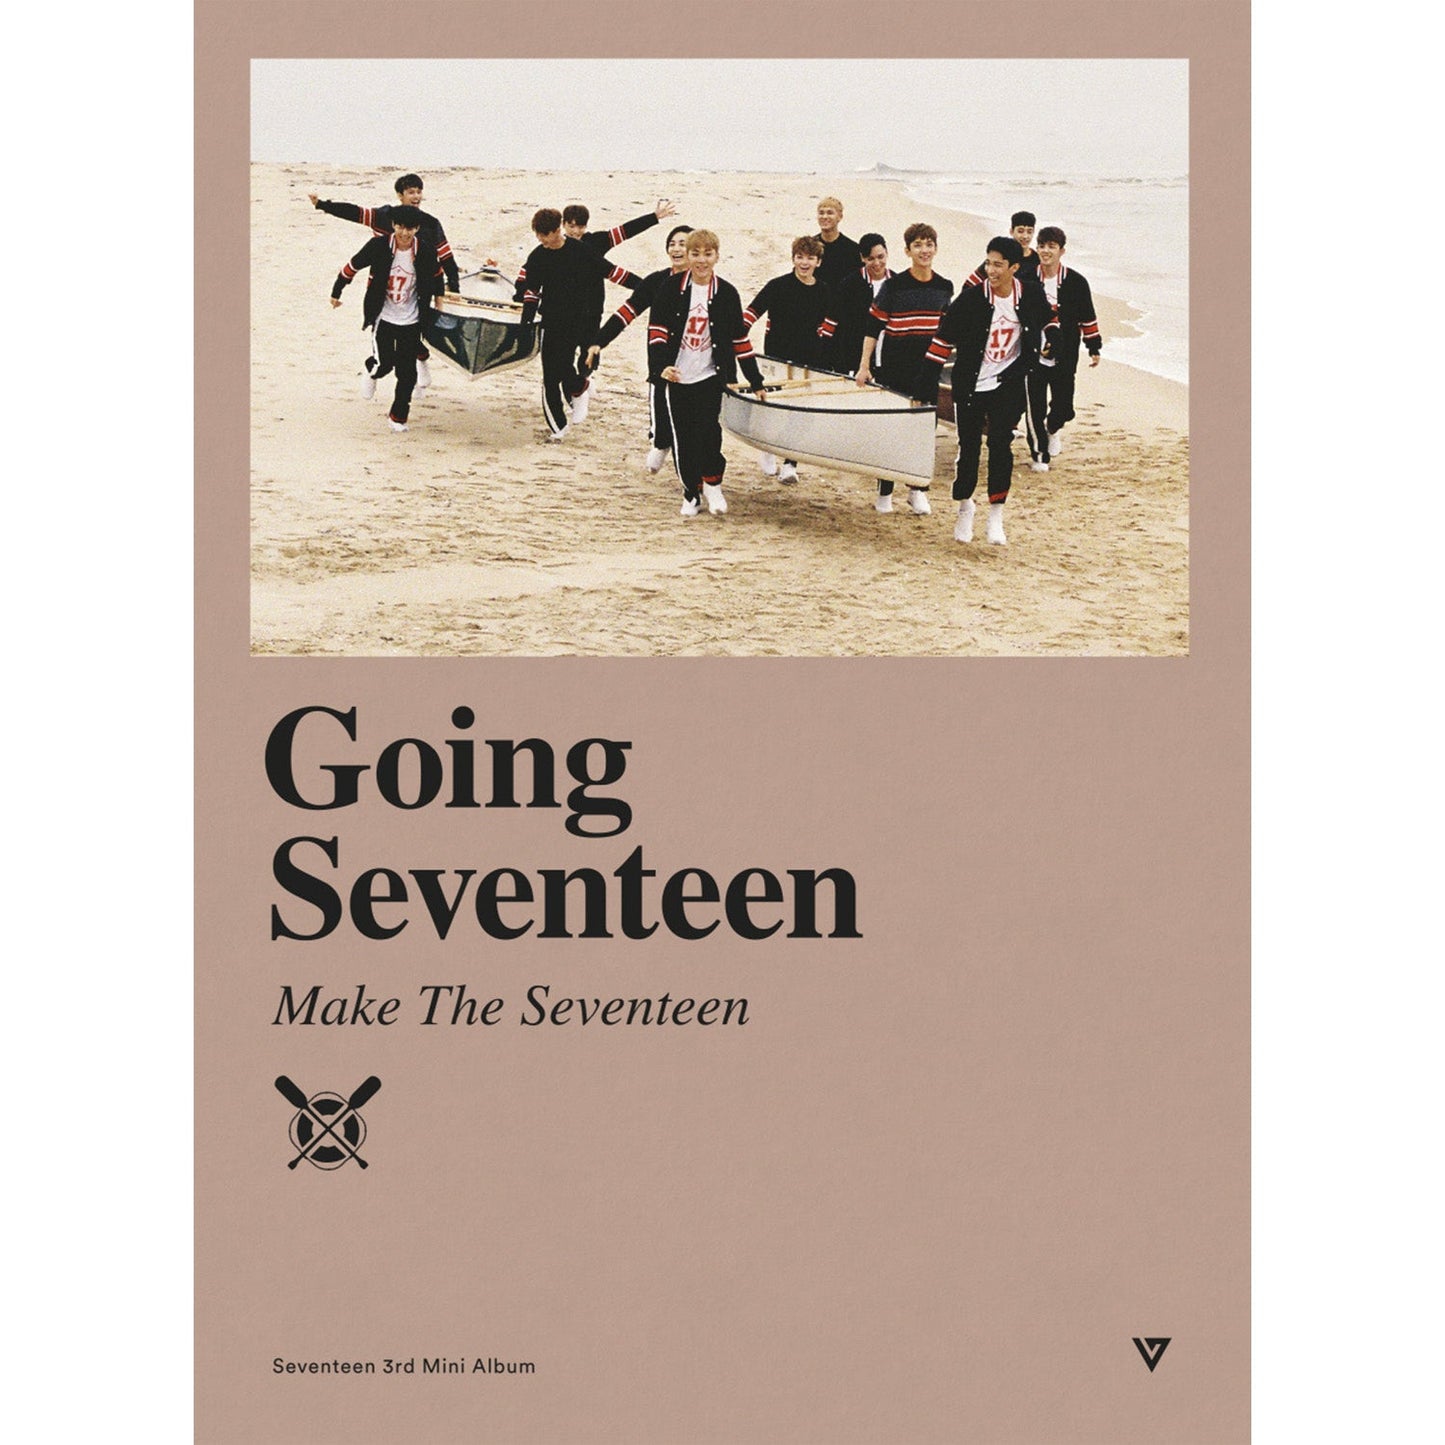 SEVENTEEN 3RD MINI ALBUM 'GOING SEVENTEEN' (RE-RELEASE) MAKE THE SEVENTEEN VERSION COVER